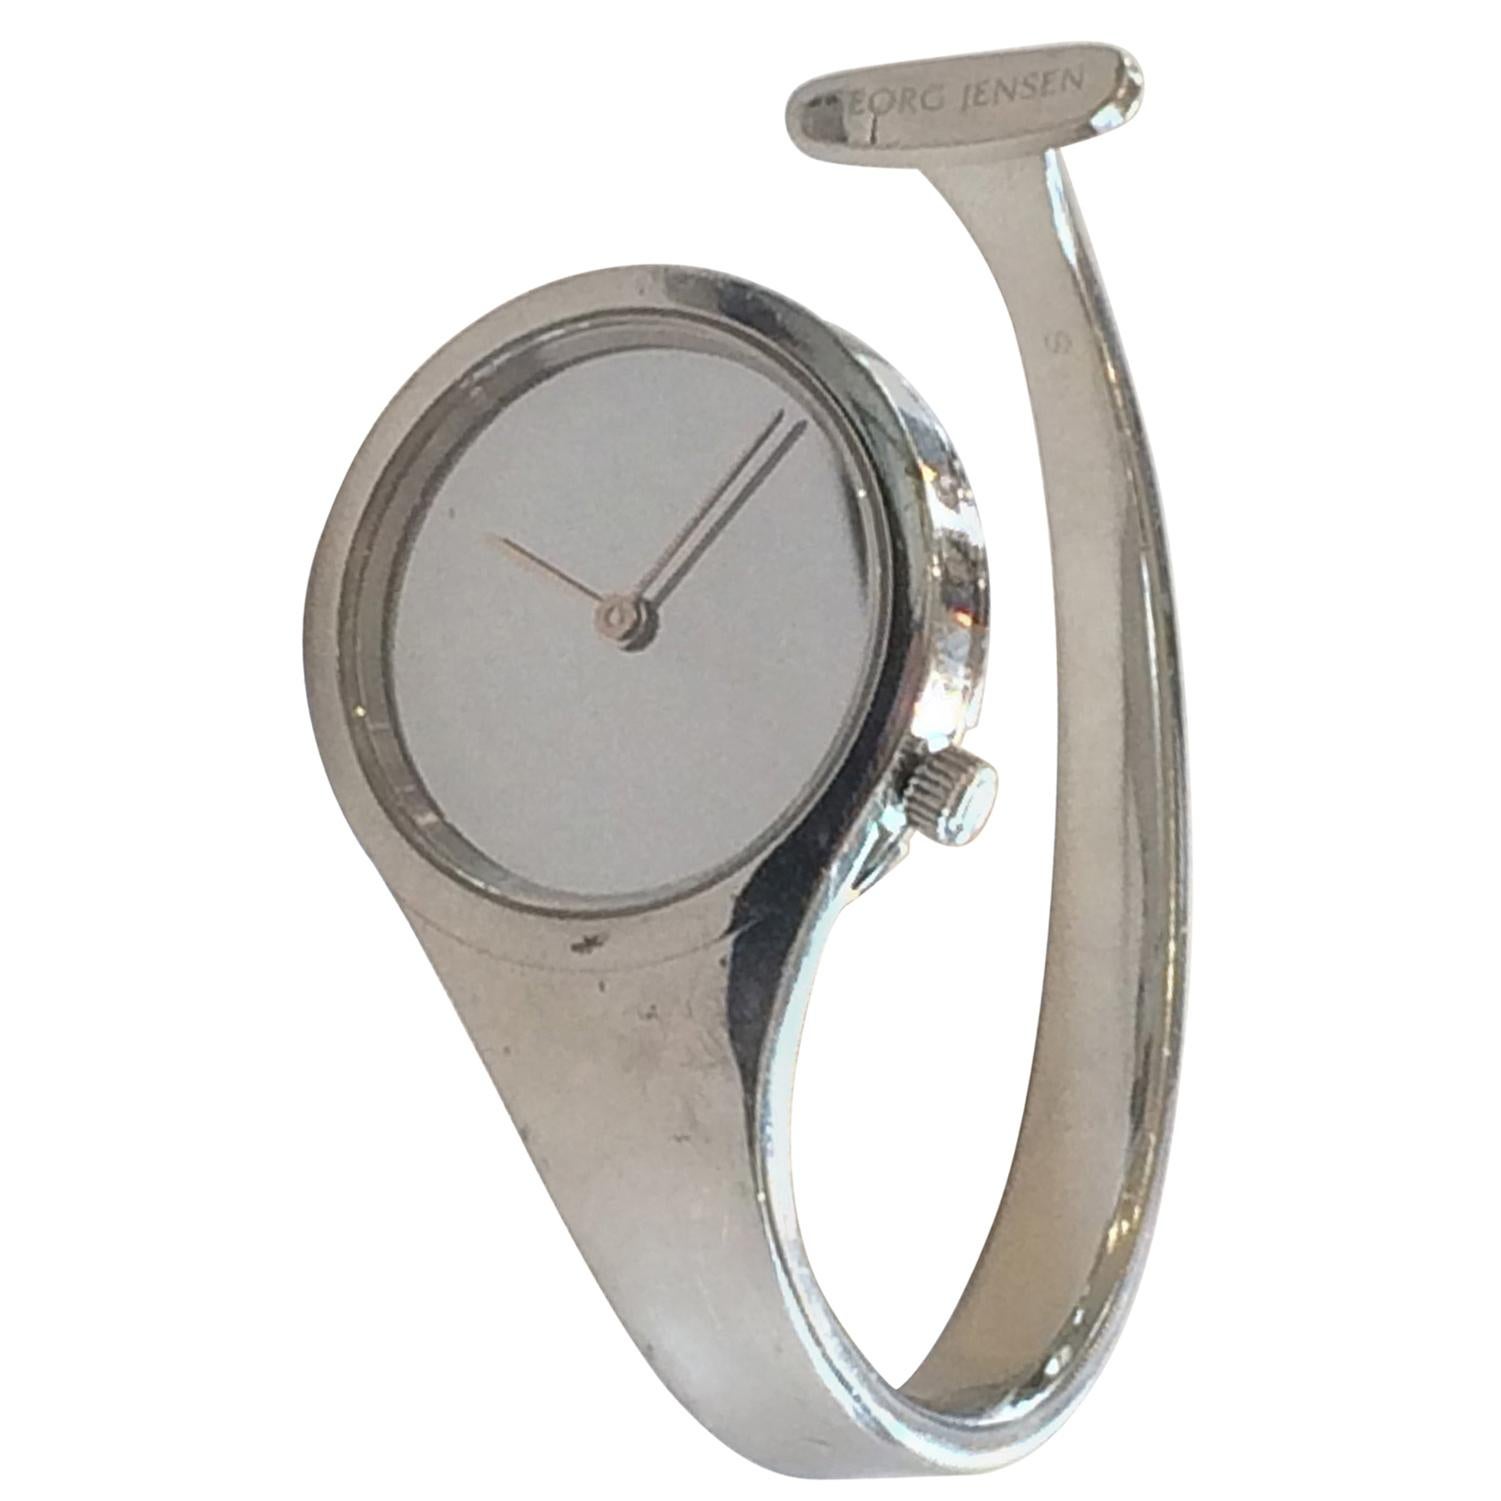 Georg Jensen by Vivianna Torun design no. 336 Bracelet Quartz Wristwatch  For Sale